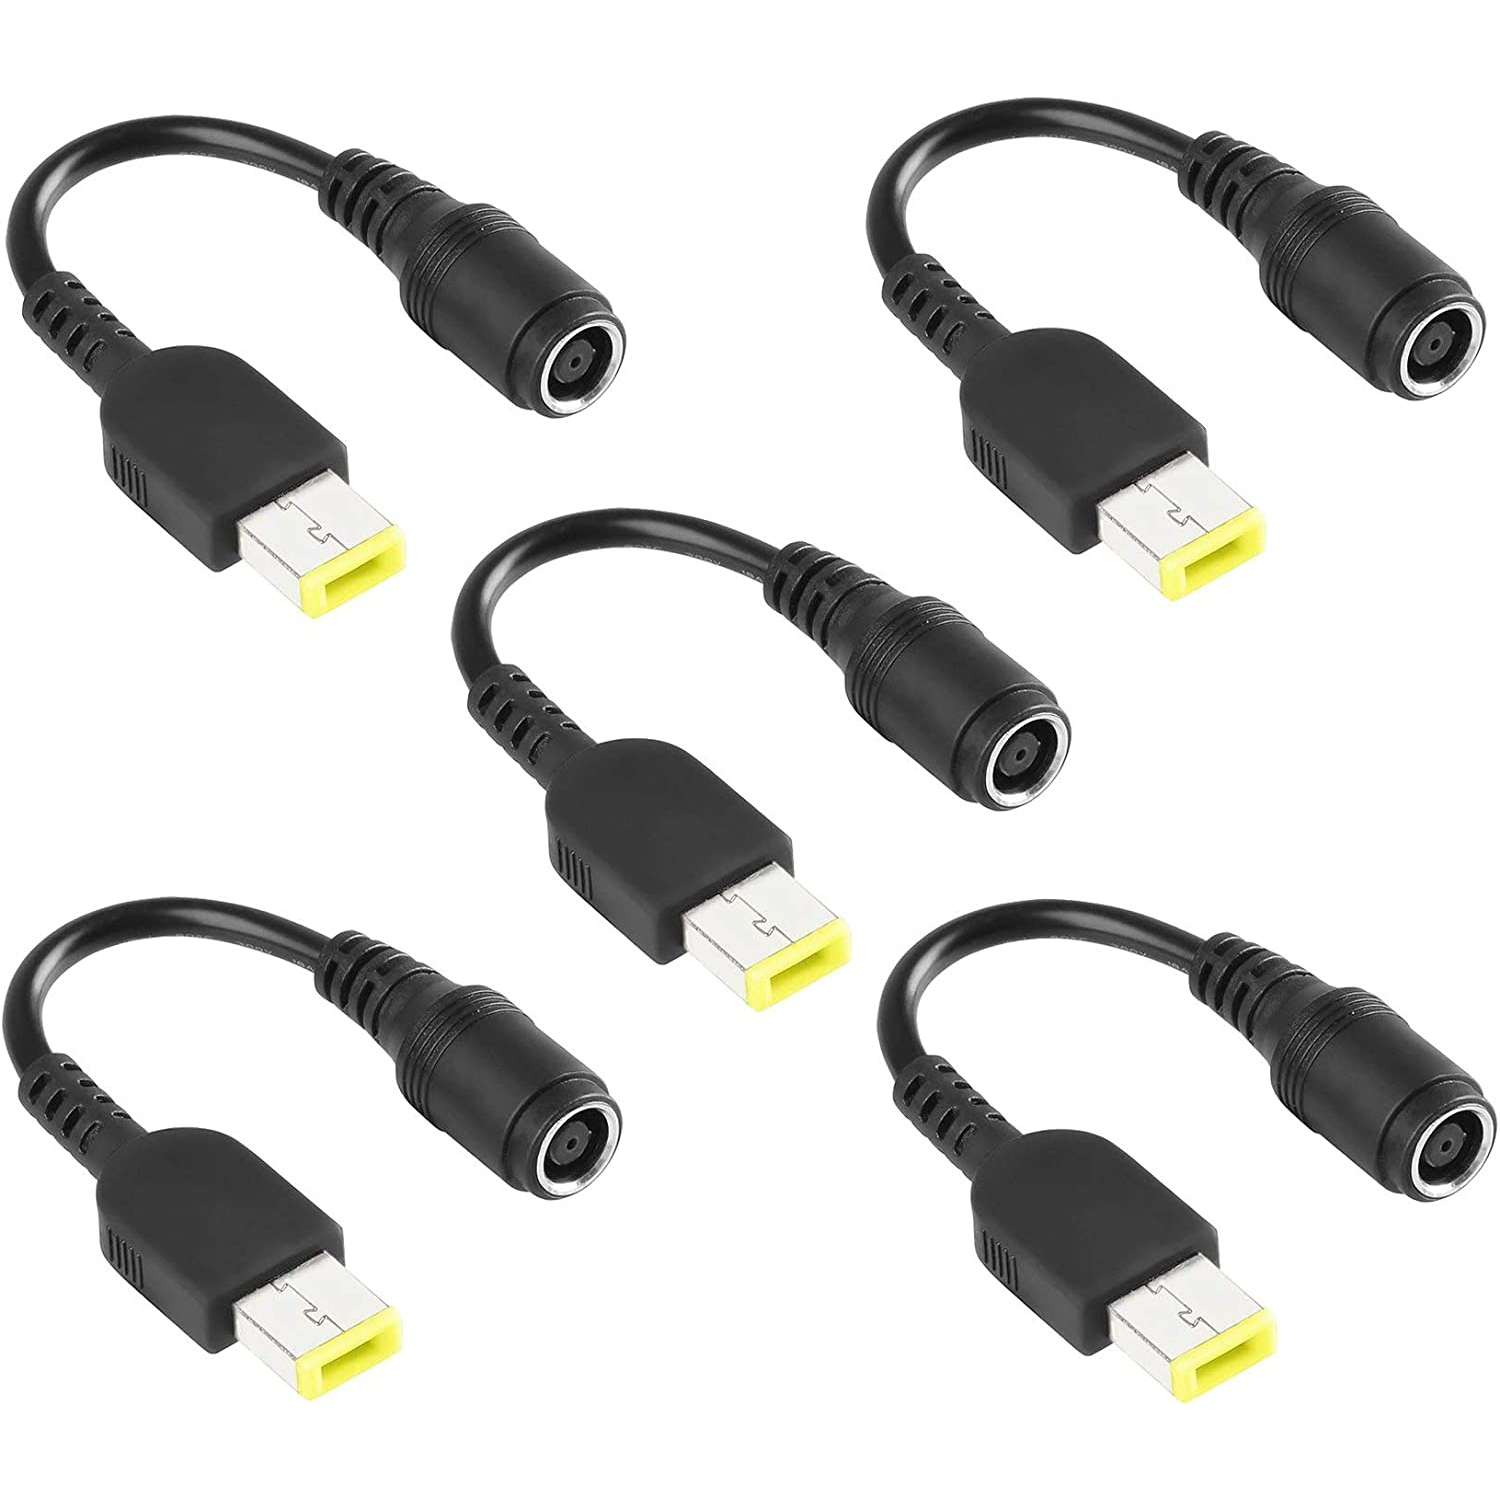 Power Supply Converter Charger Cable Adapter For Lenovo ThinkPad X1 Carbon 0B47046 Lenovo Ideapad Yoga 11, 11s, 13, 2 Pro, Flex 14, 15; Lenovo ThinkPad Helix, x24